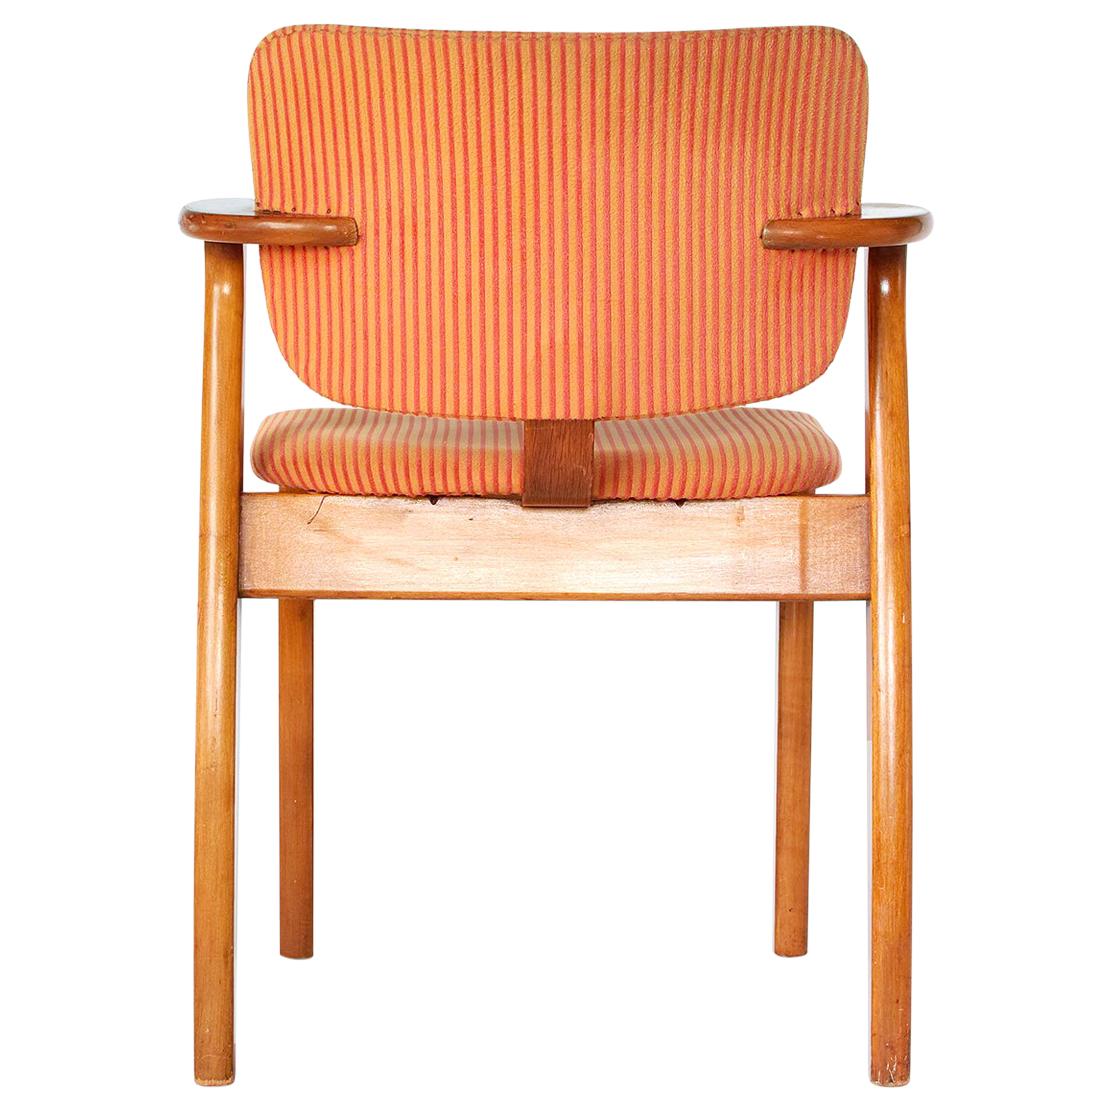 Early Production "Domus" Chair by Ilmari Tapiovaara